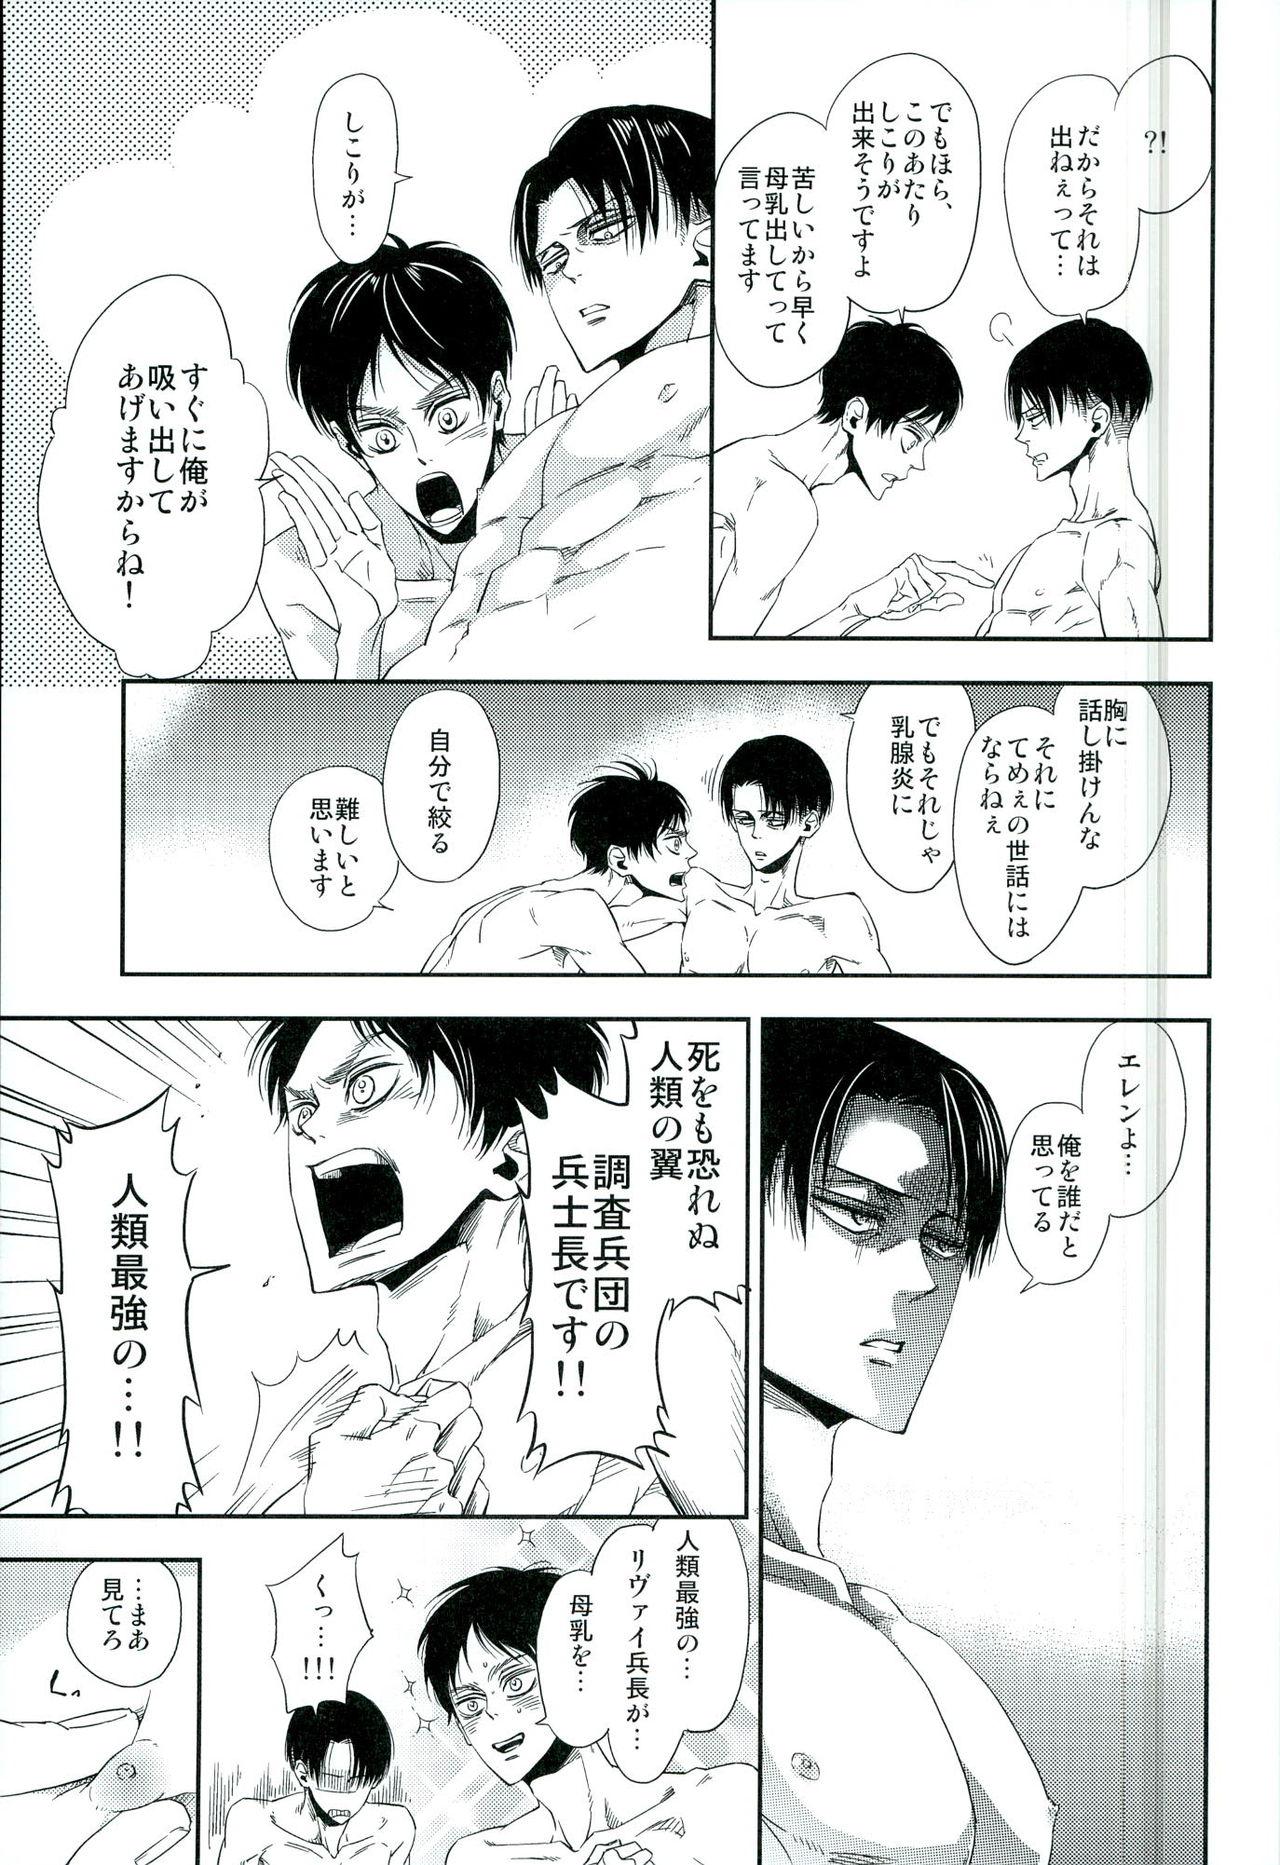 Outdoors 兵長のおっぱいから母乳が出るところが見たい! - Shingeki no kyojin Adult - Page 8